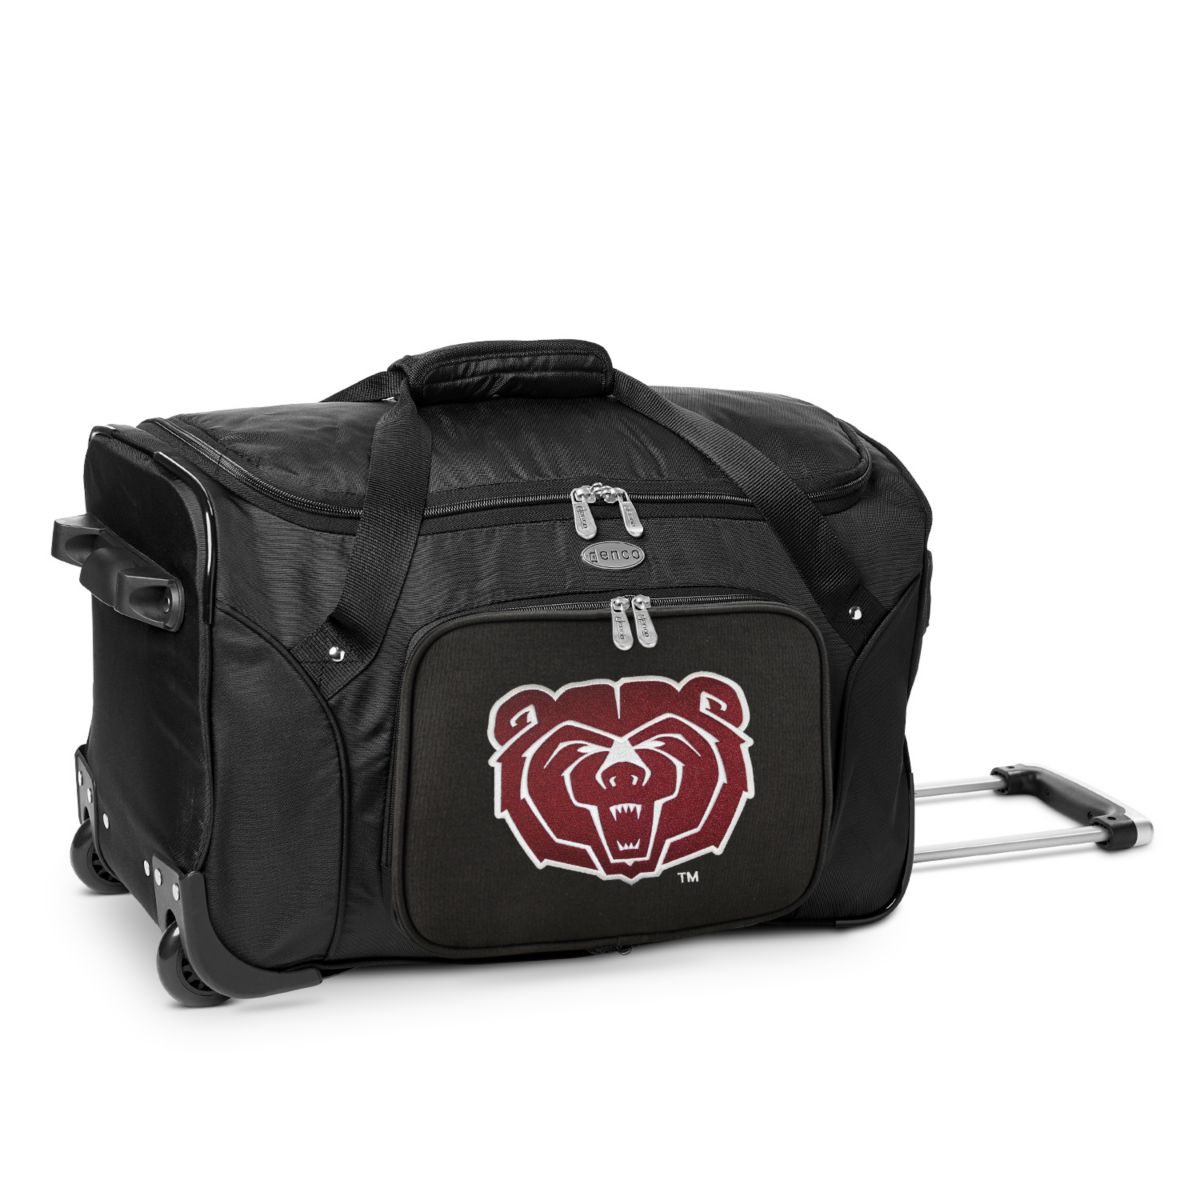 Спортивная сумка Denco Missouri State Bears на колесиках диаметром 22 дюйма Denco